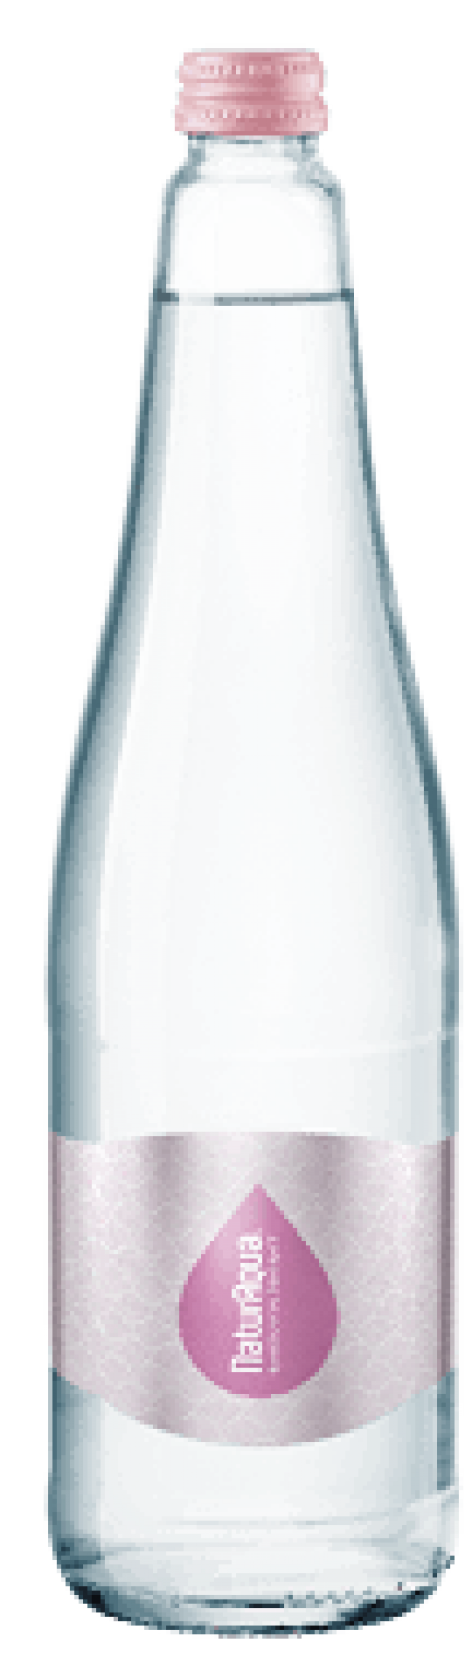 Brand new bottles for NaturAqua